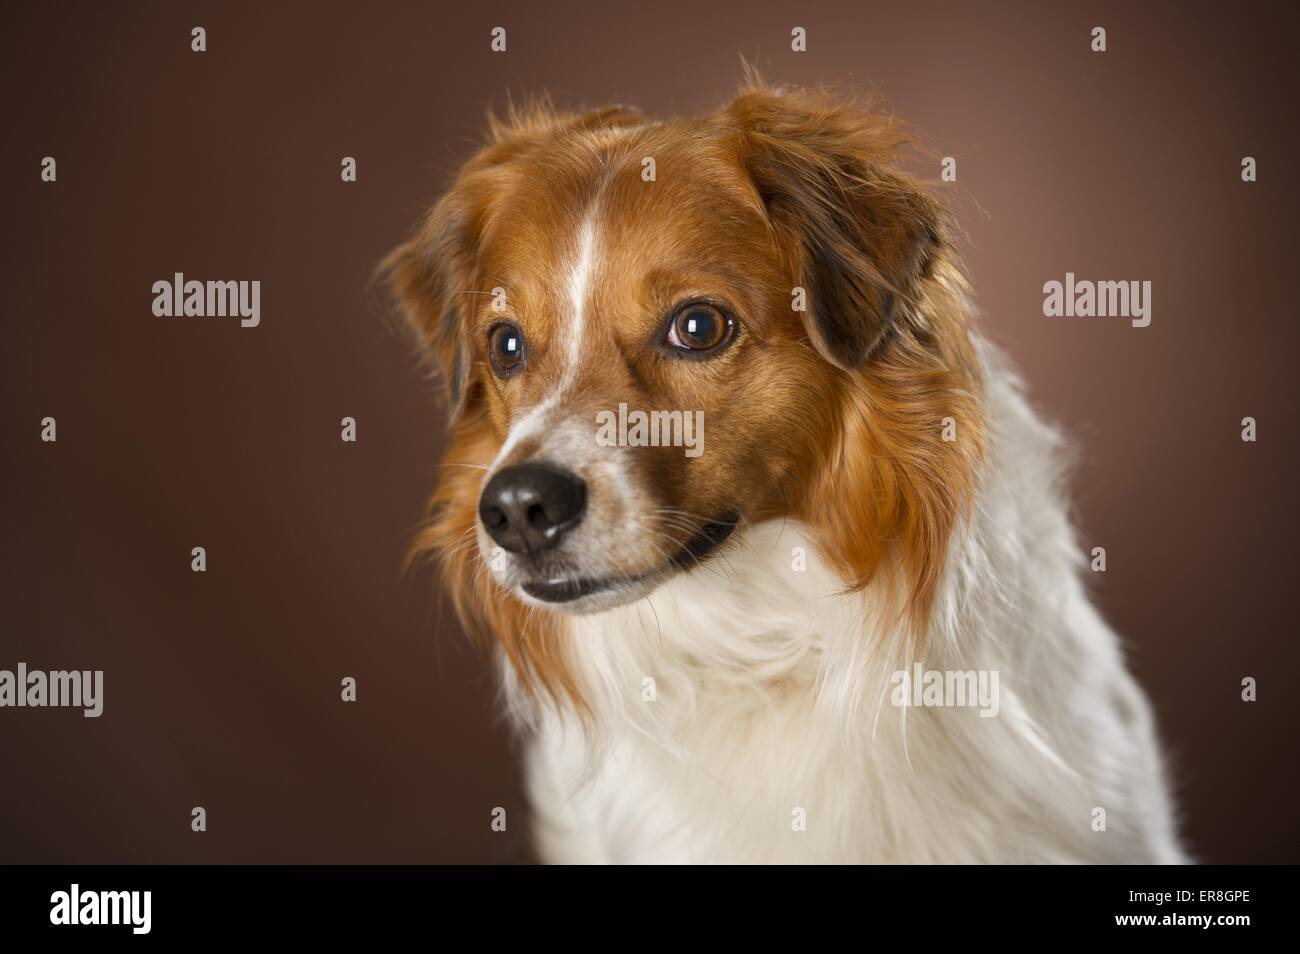 Krom dog portrait Stock Photo